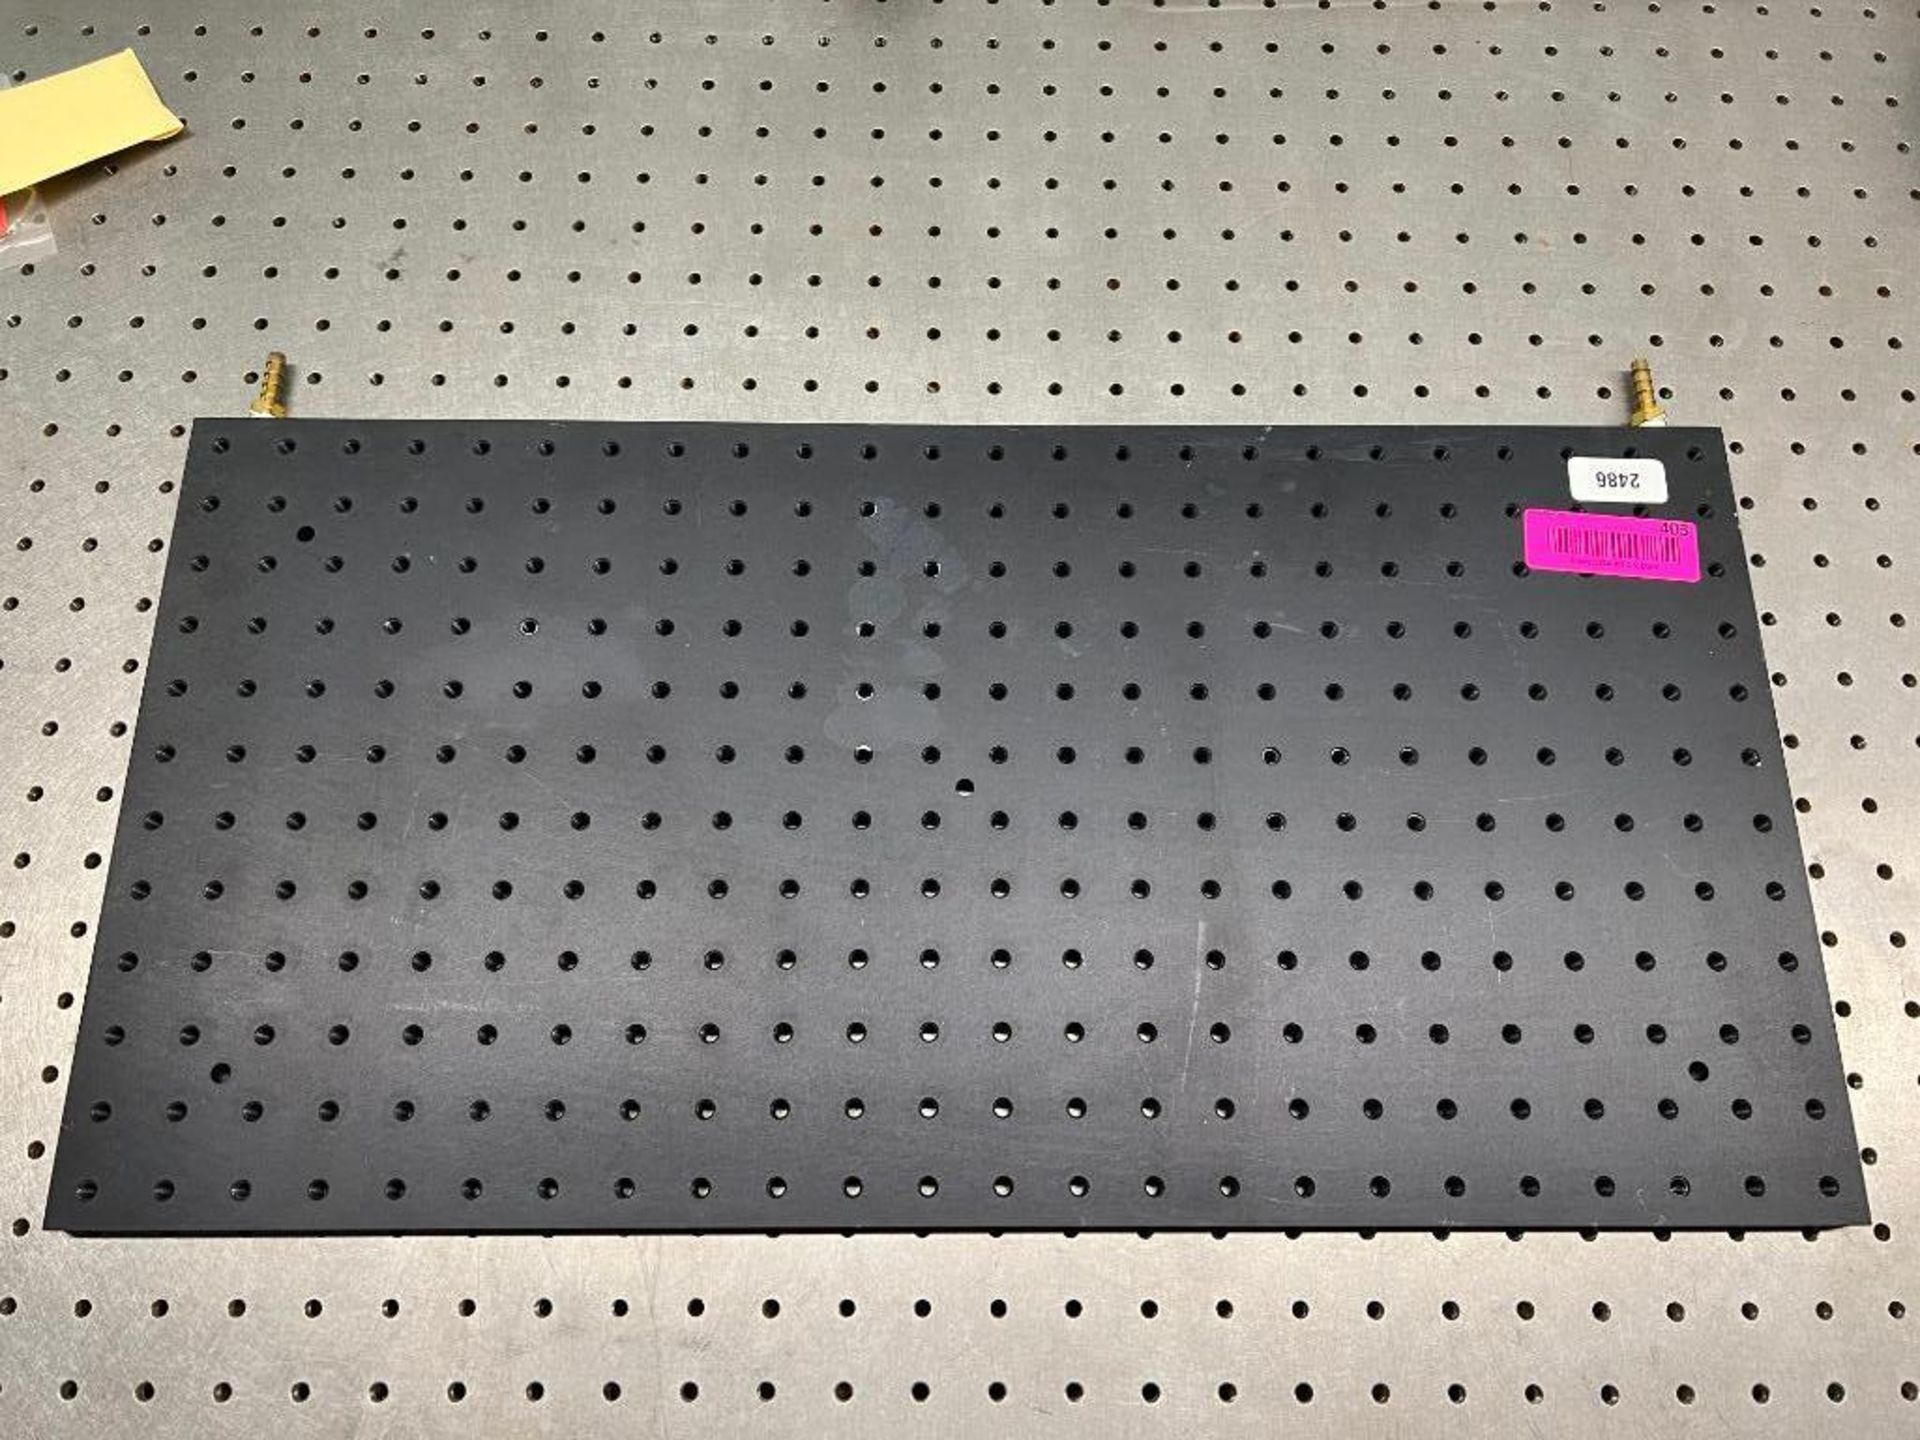 DESCRIPTION: LIQUID COOLED BREADBOARD BRAND/MODEL: THORLABS SIZE: 0.5"X12"X24" RETAIL$: $1,150 ORIGI - Image 3 of 6